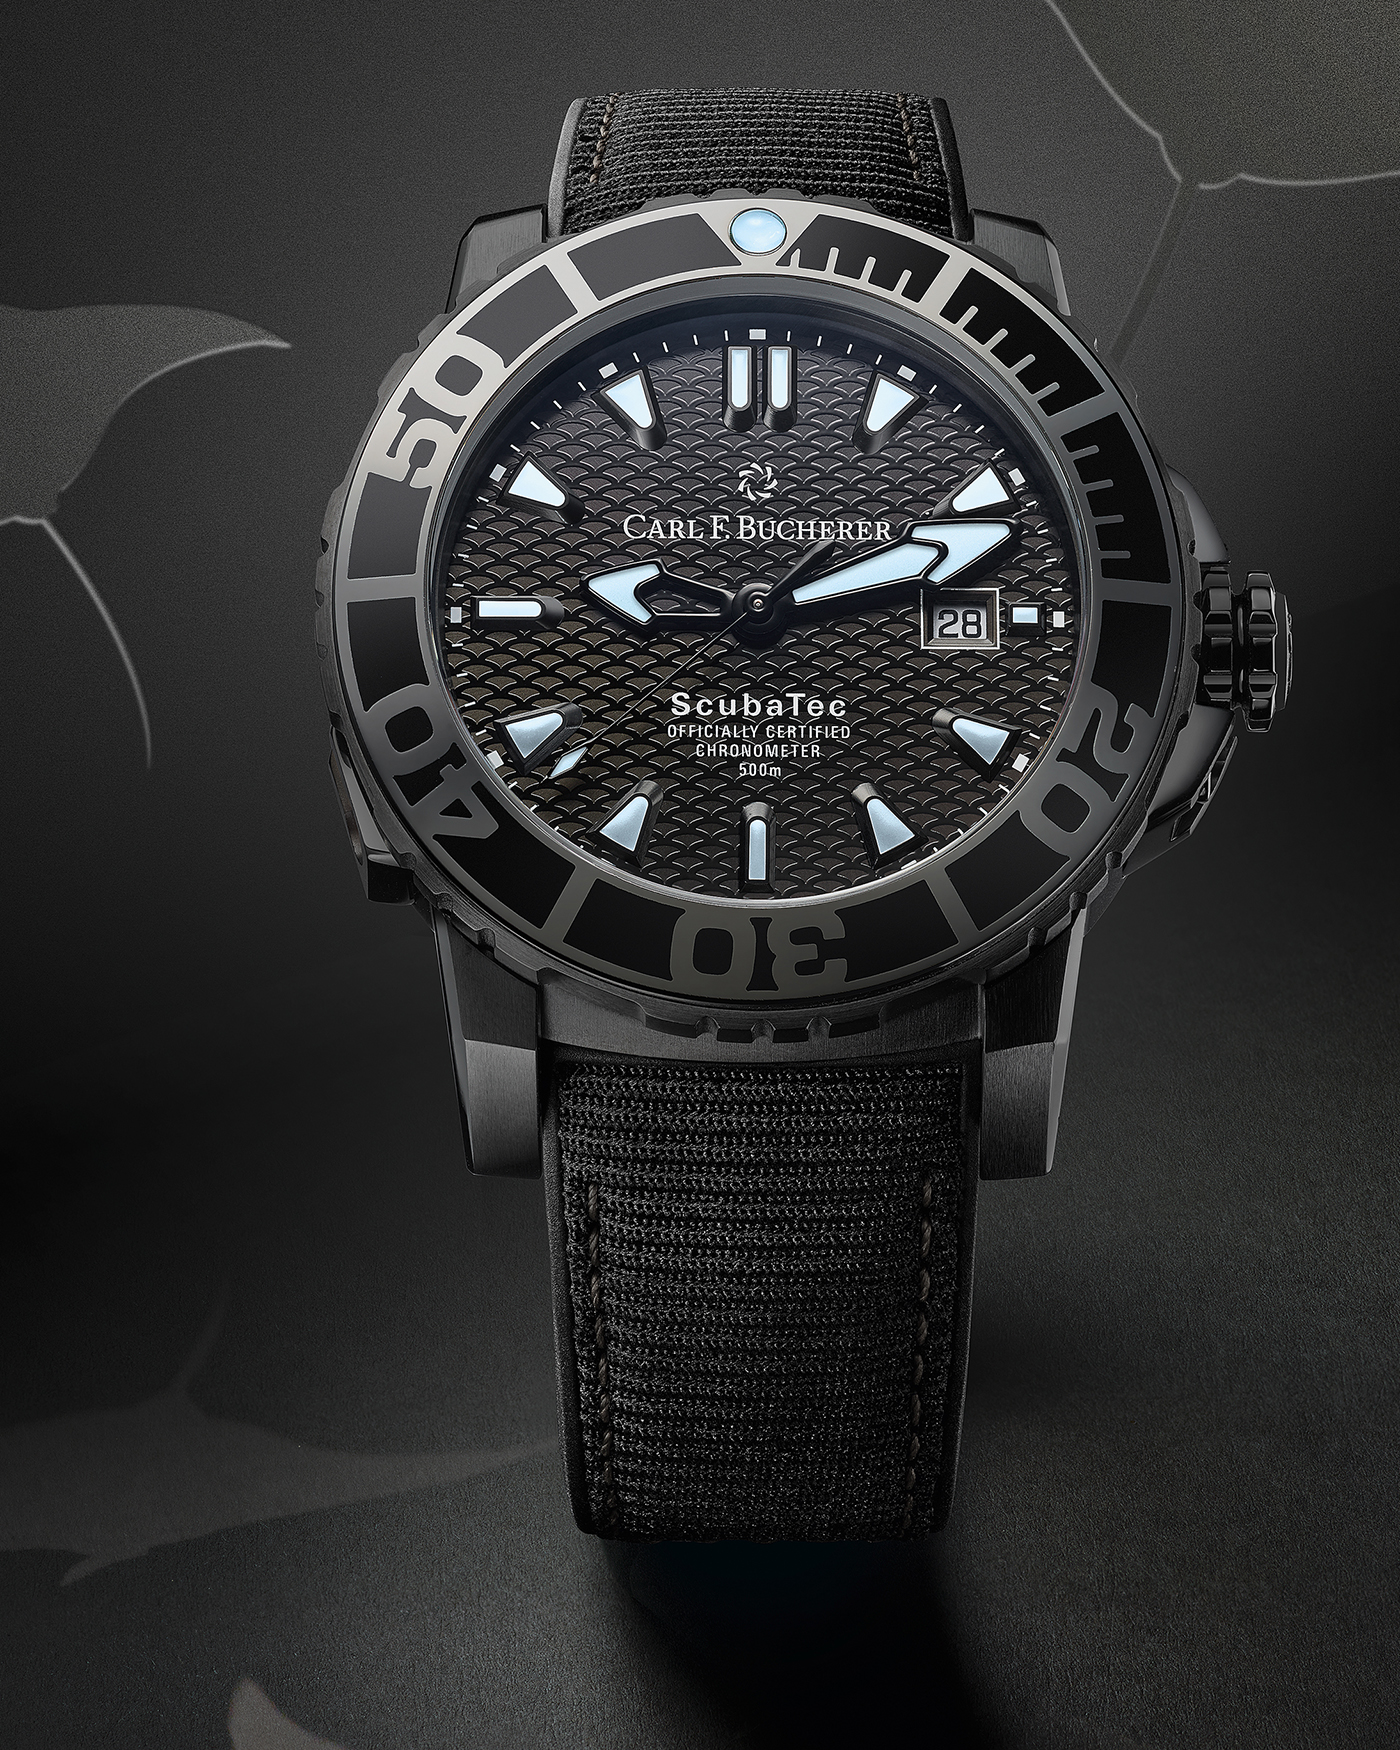 Carl F. Bucherer Introduces New Monochrome Patravi ScubaTec Black Watch Releases 